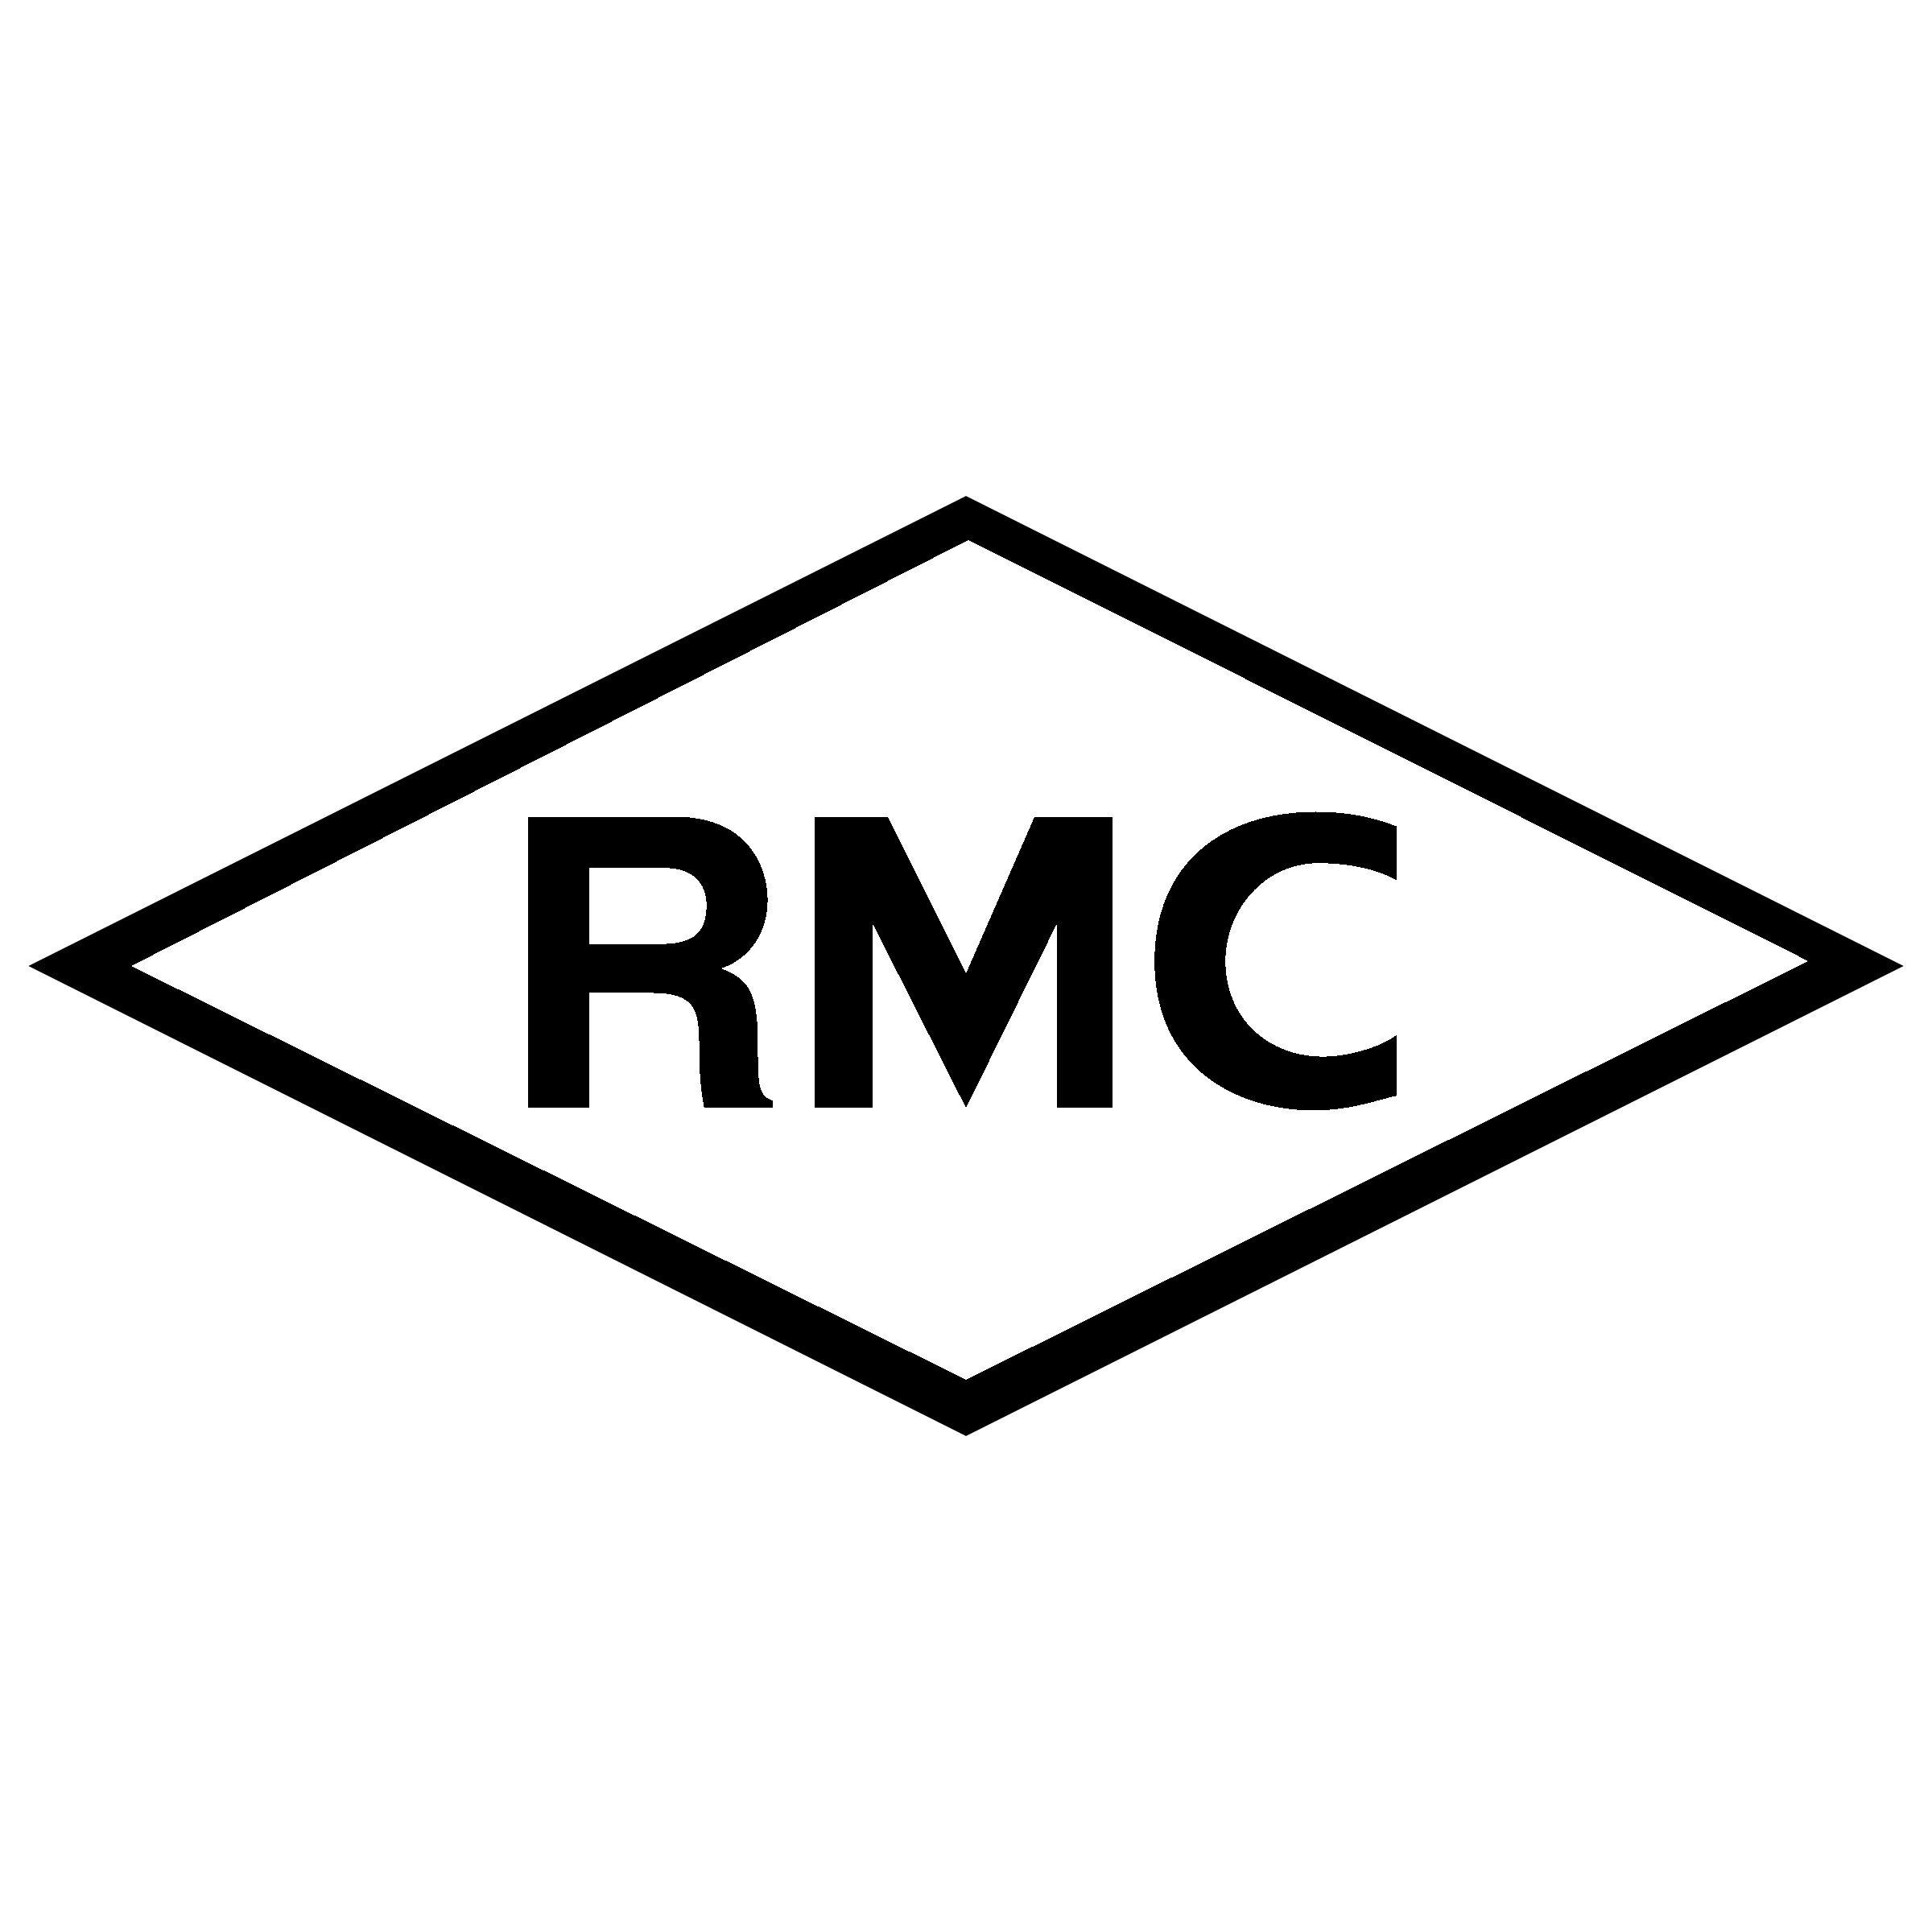 RMC Logo - RMC Logo PNG Transparent & SVG Vector - Freebie Supply